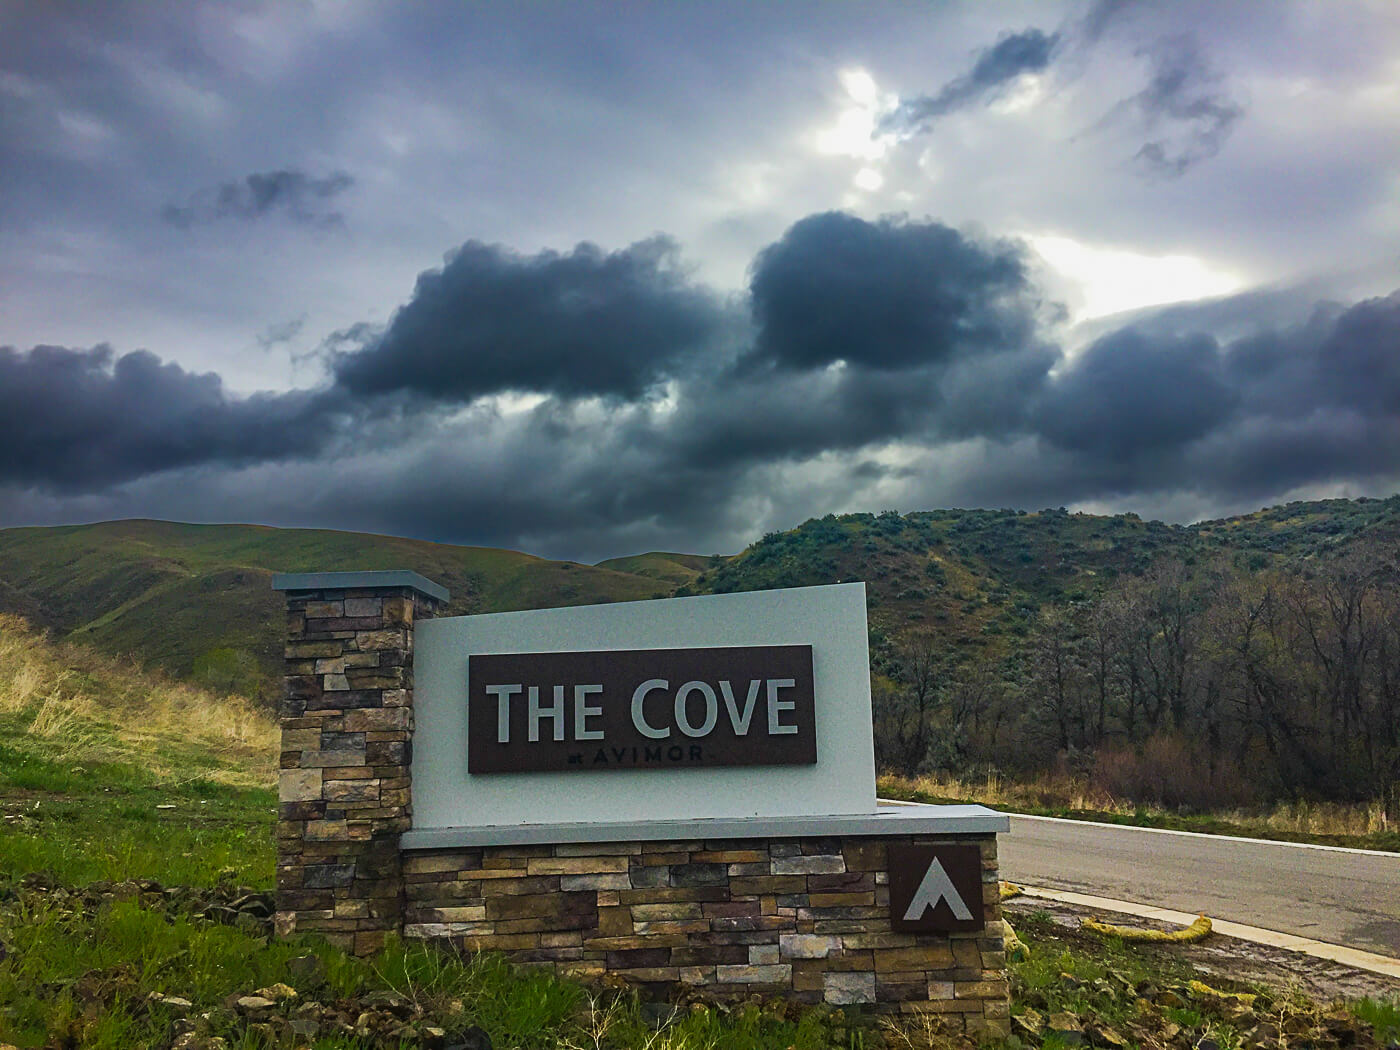 The Cove at Avimor in Boise Foothills